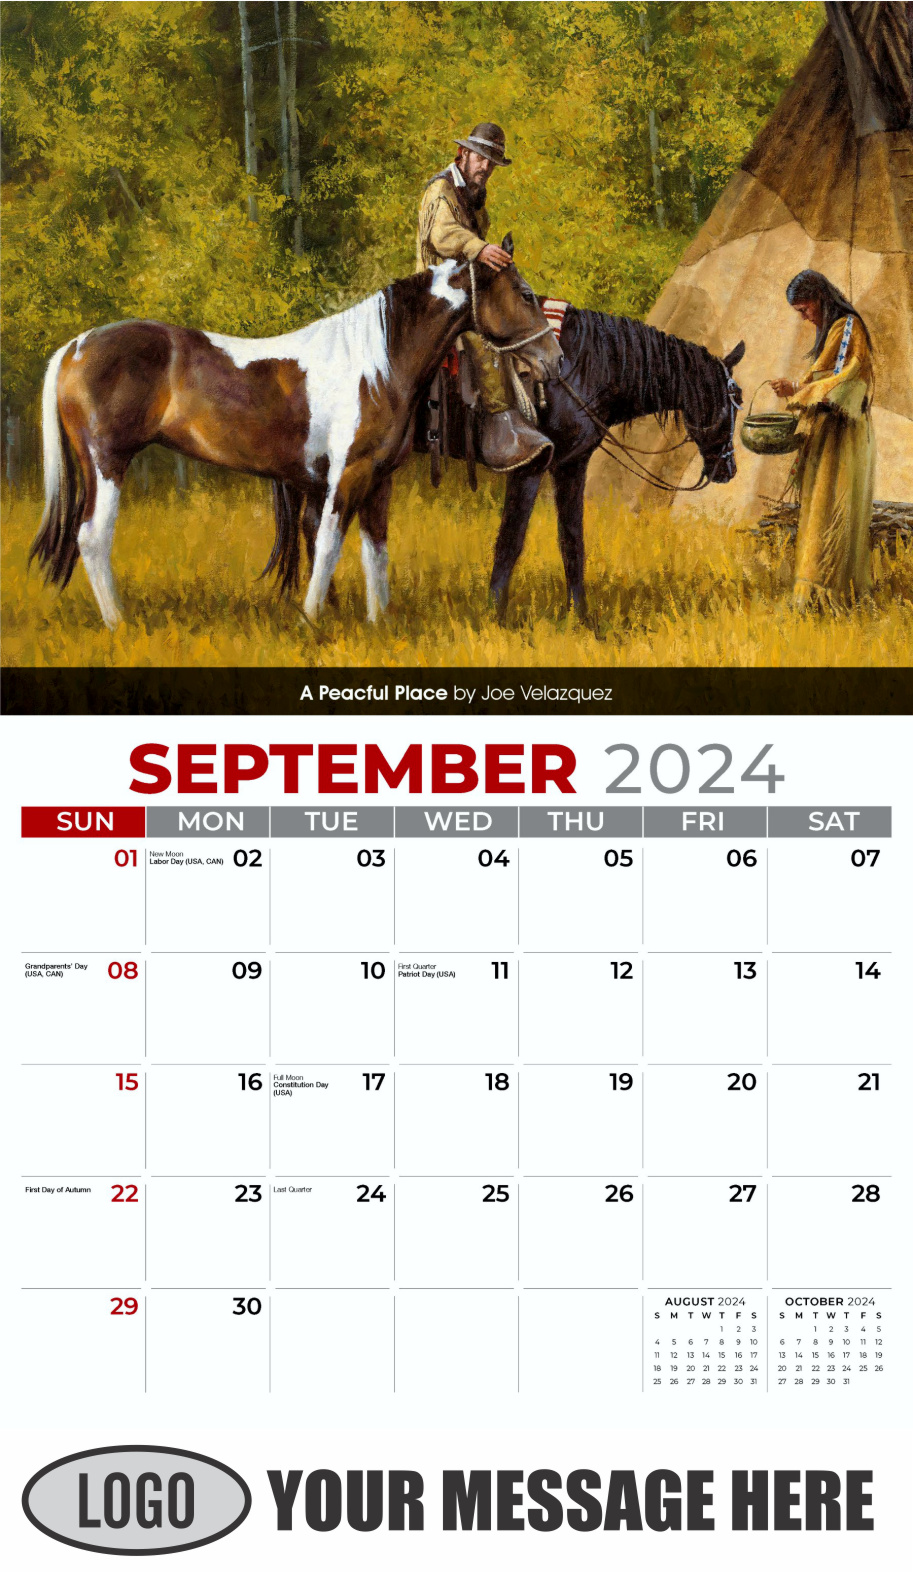 Spirit of the Old West 2024 Old West Art Business Promo Wall Calendar - September